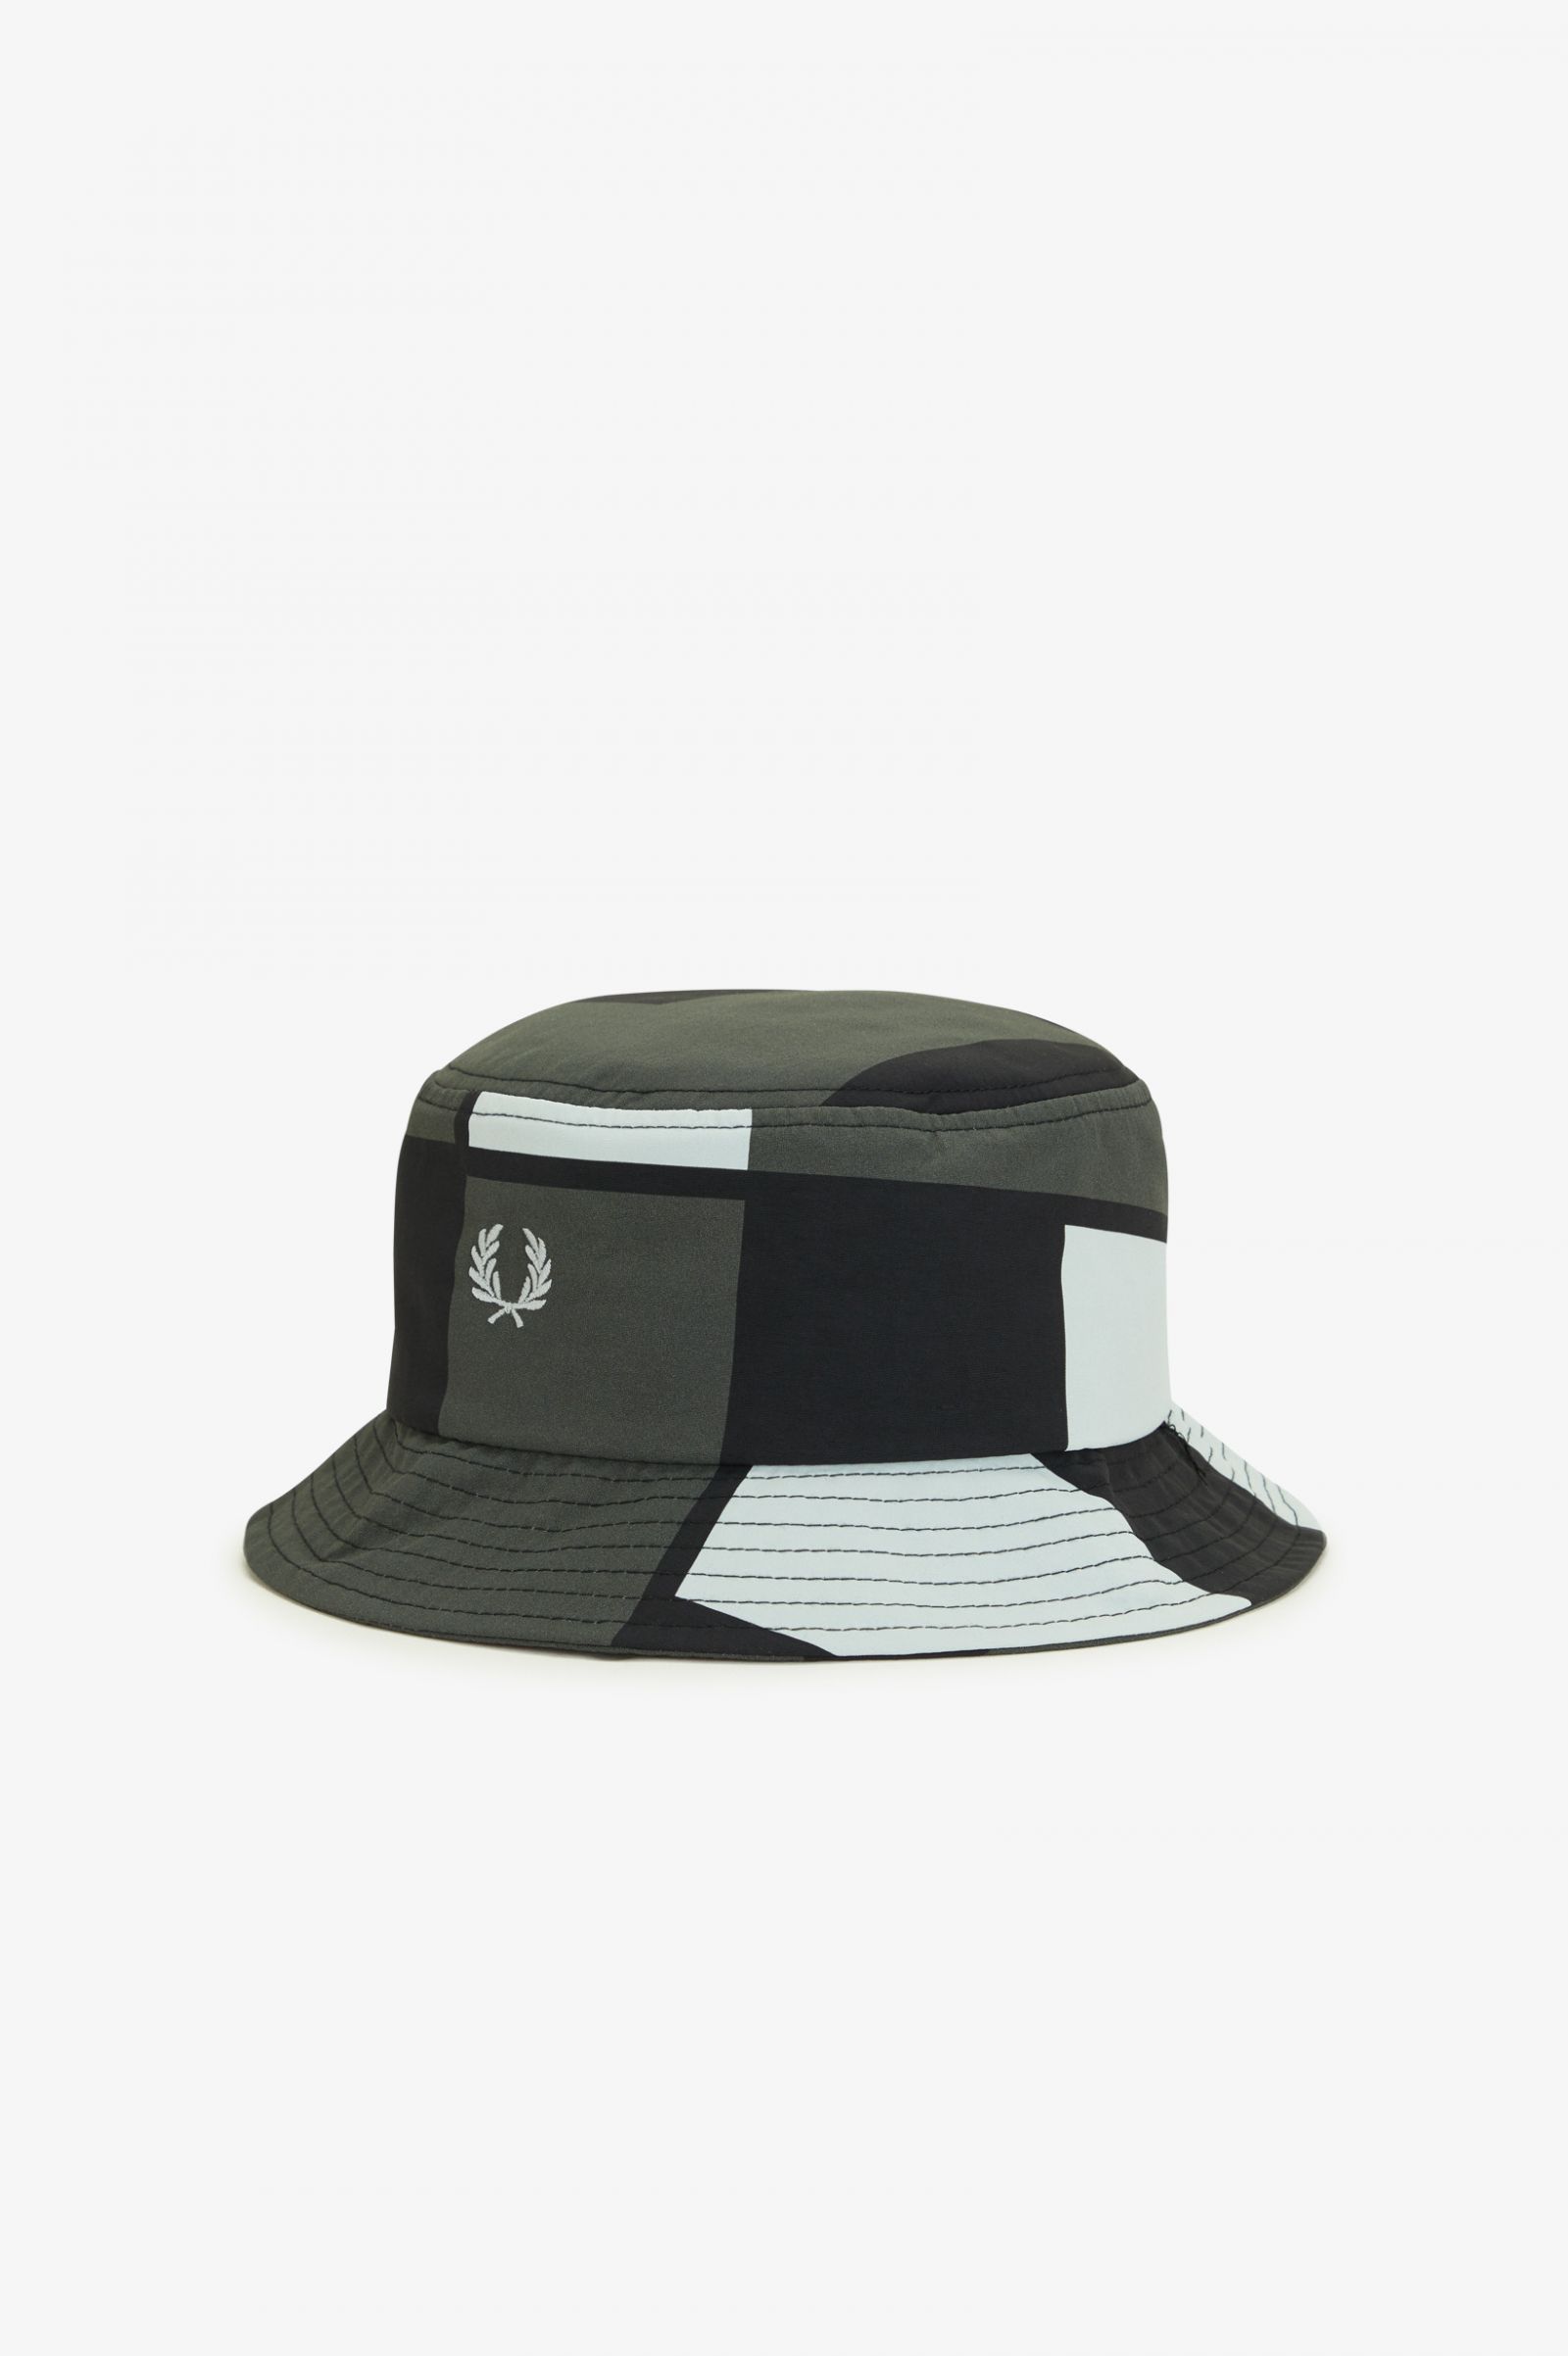 Pixel Print Bucket Hat - Light Ice / Field Green / Black | Accessories ...